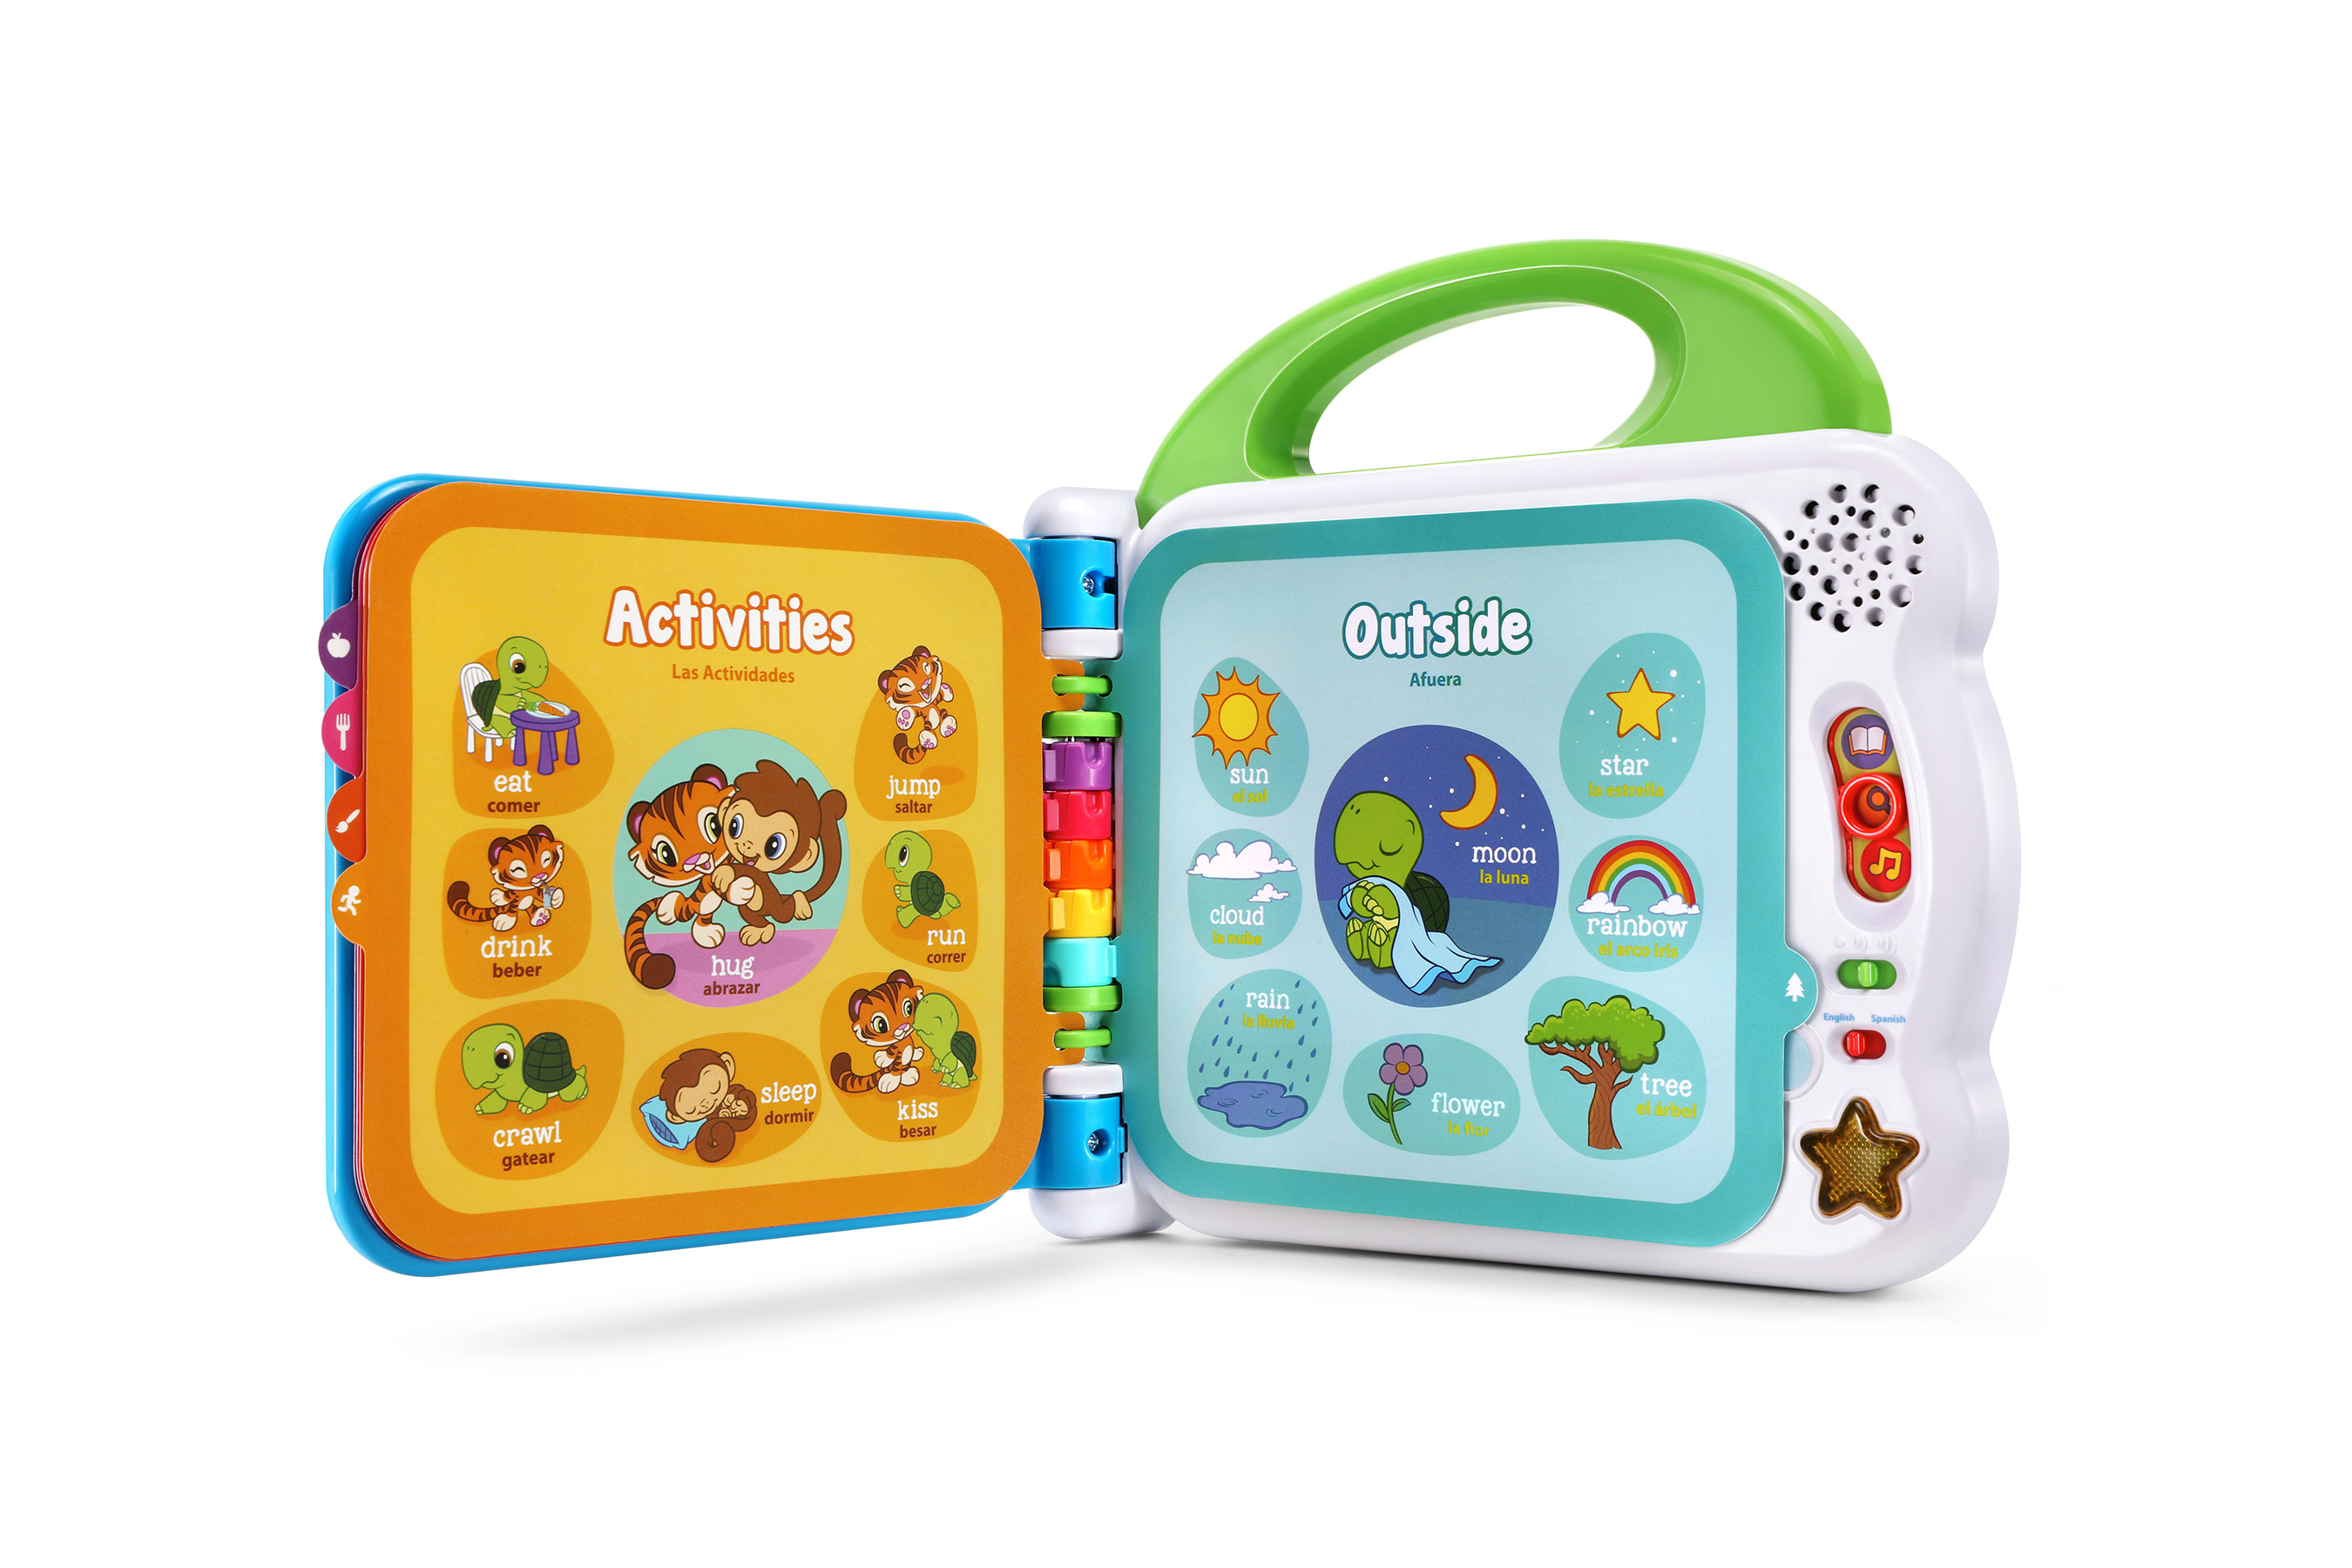 leapfrog educational toys for toddlers